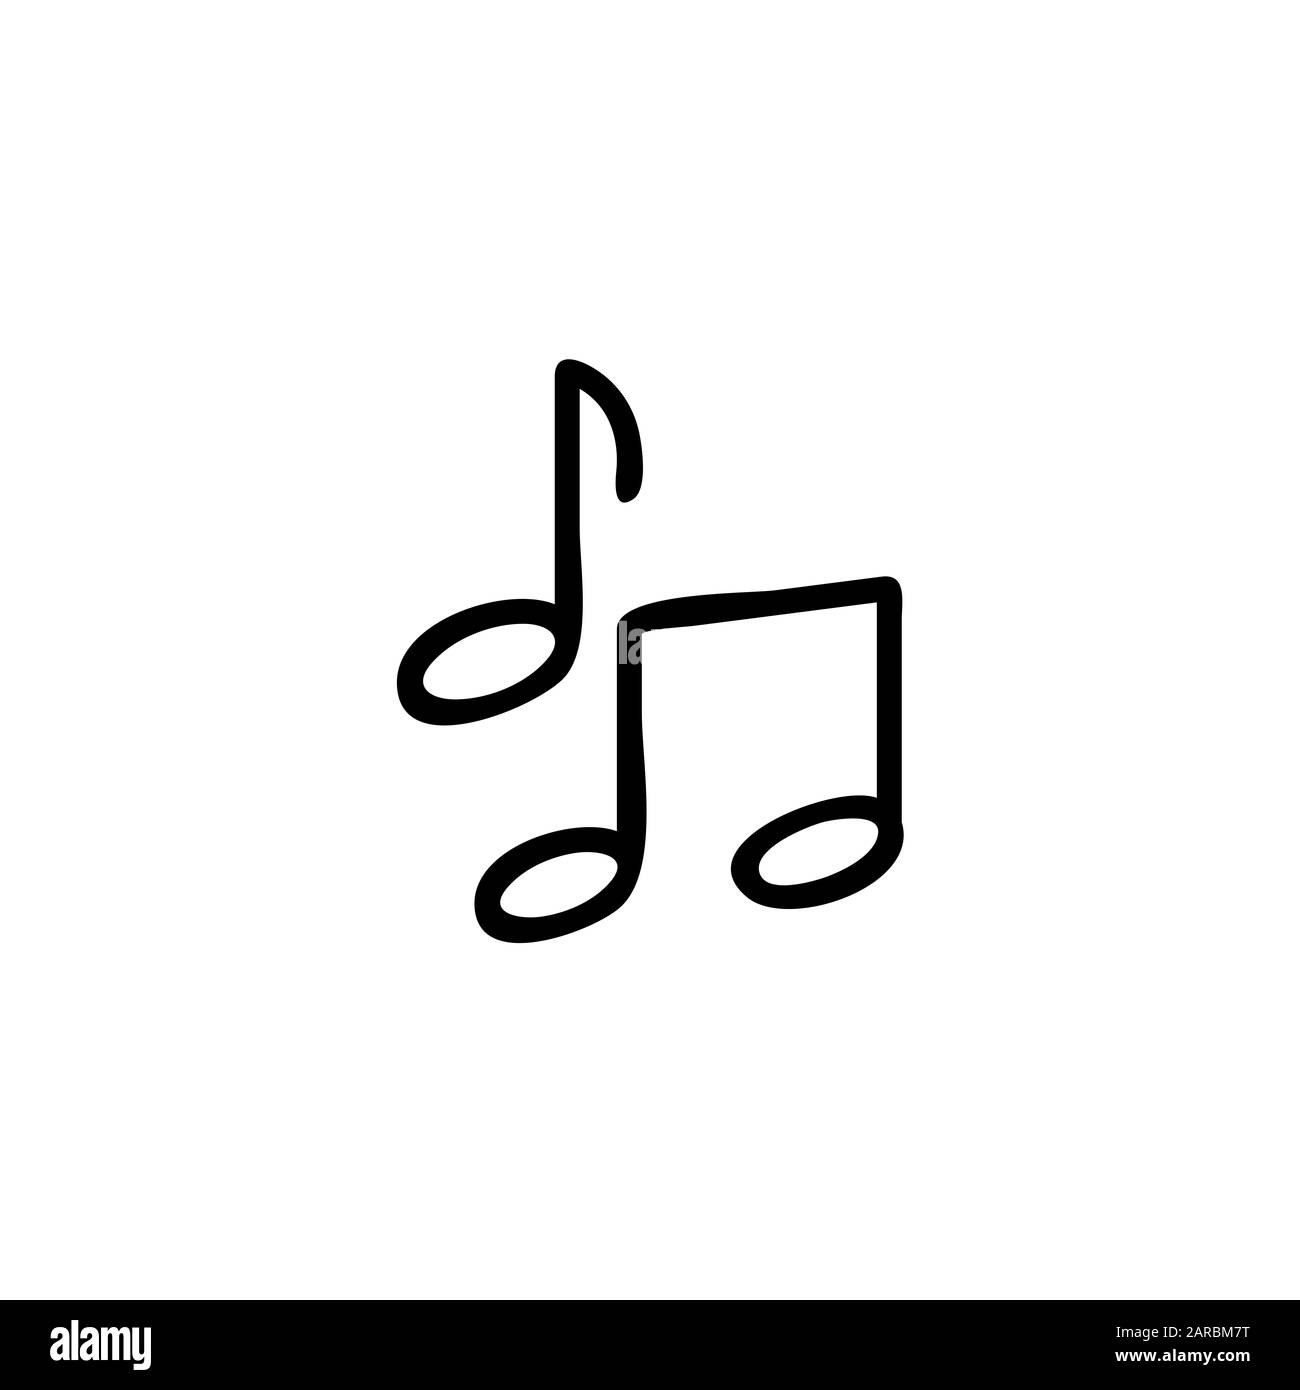 music icon line design template Stock Photo